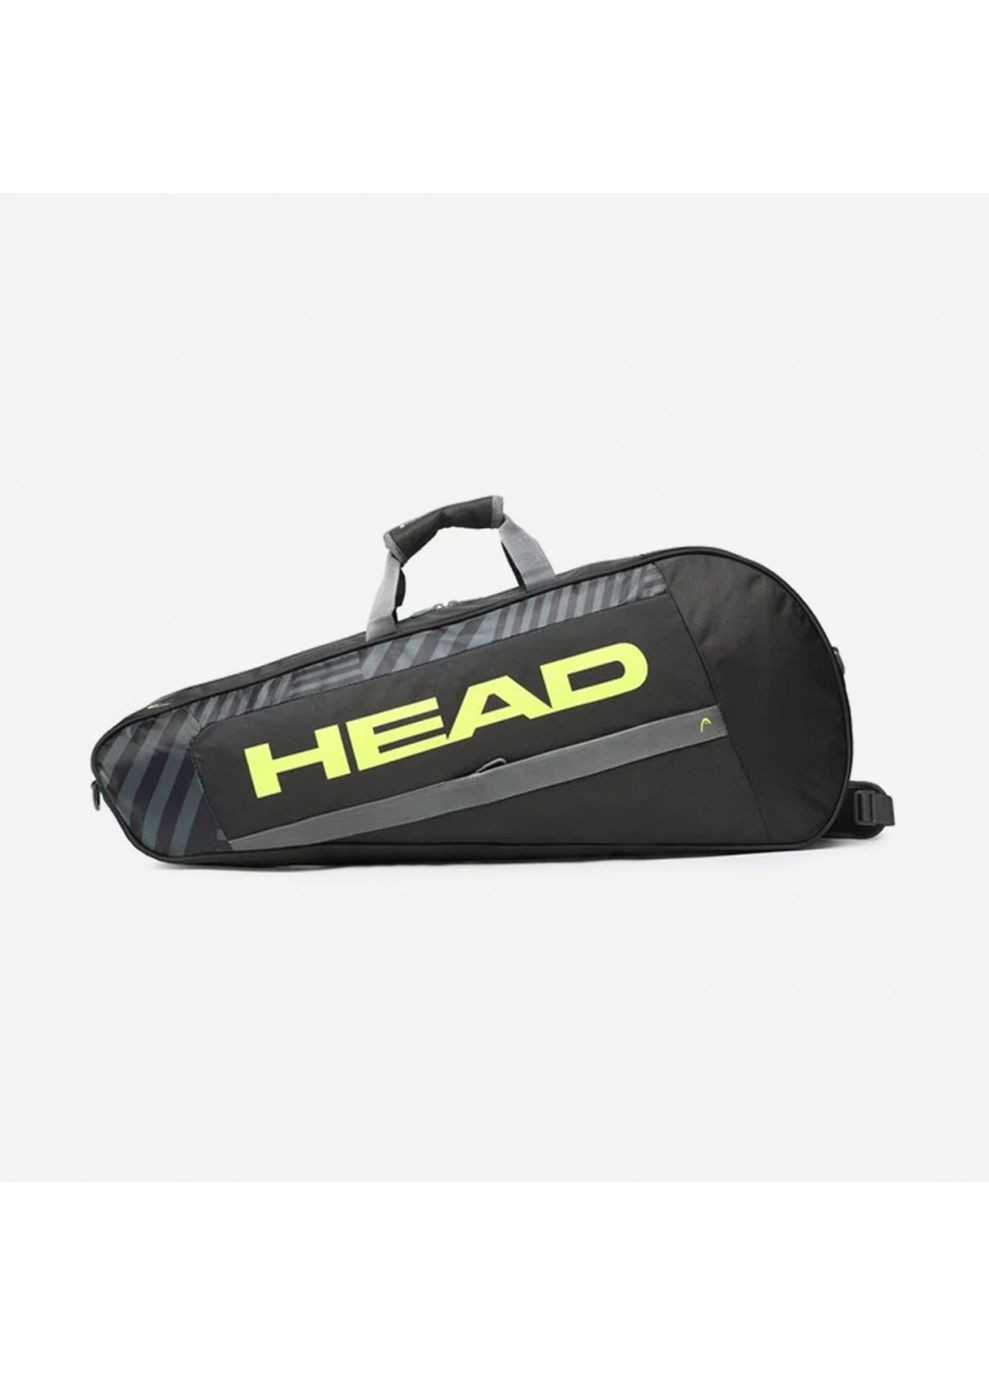 Чехол Base Racquet Bag M BKNY Черный Желтый Head (282316185)